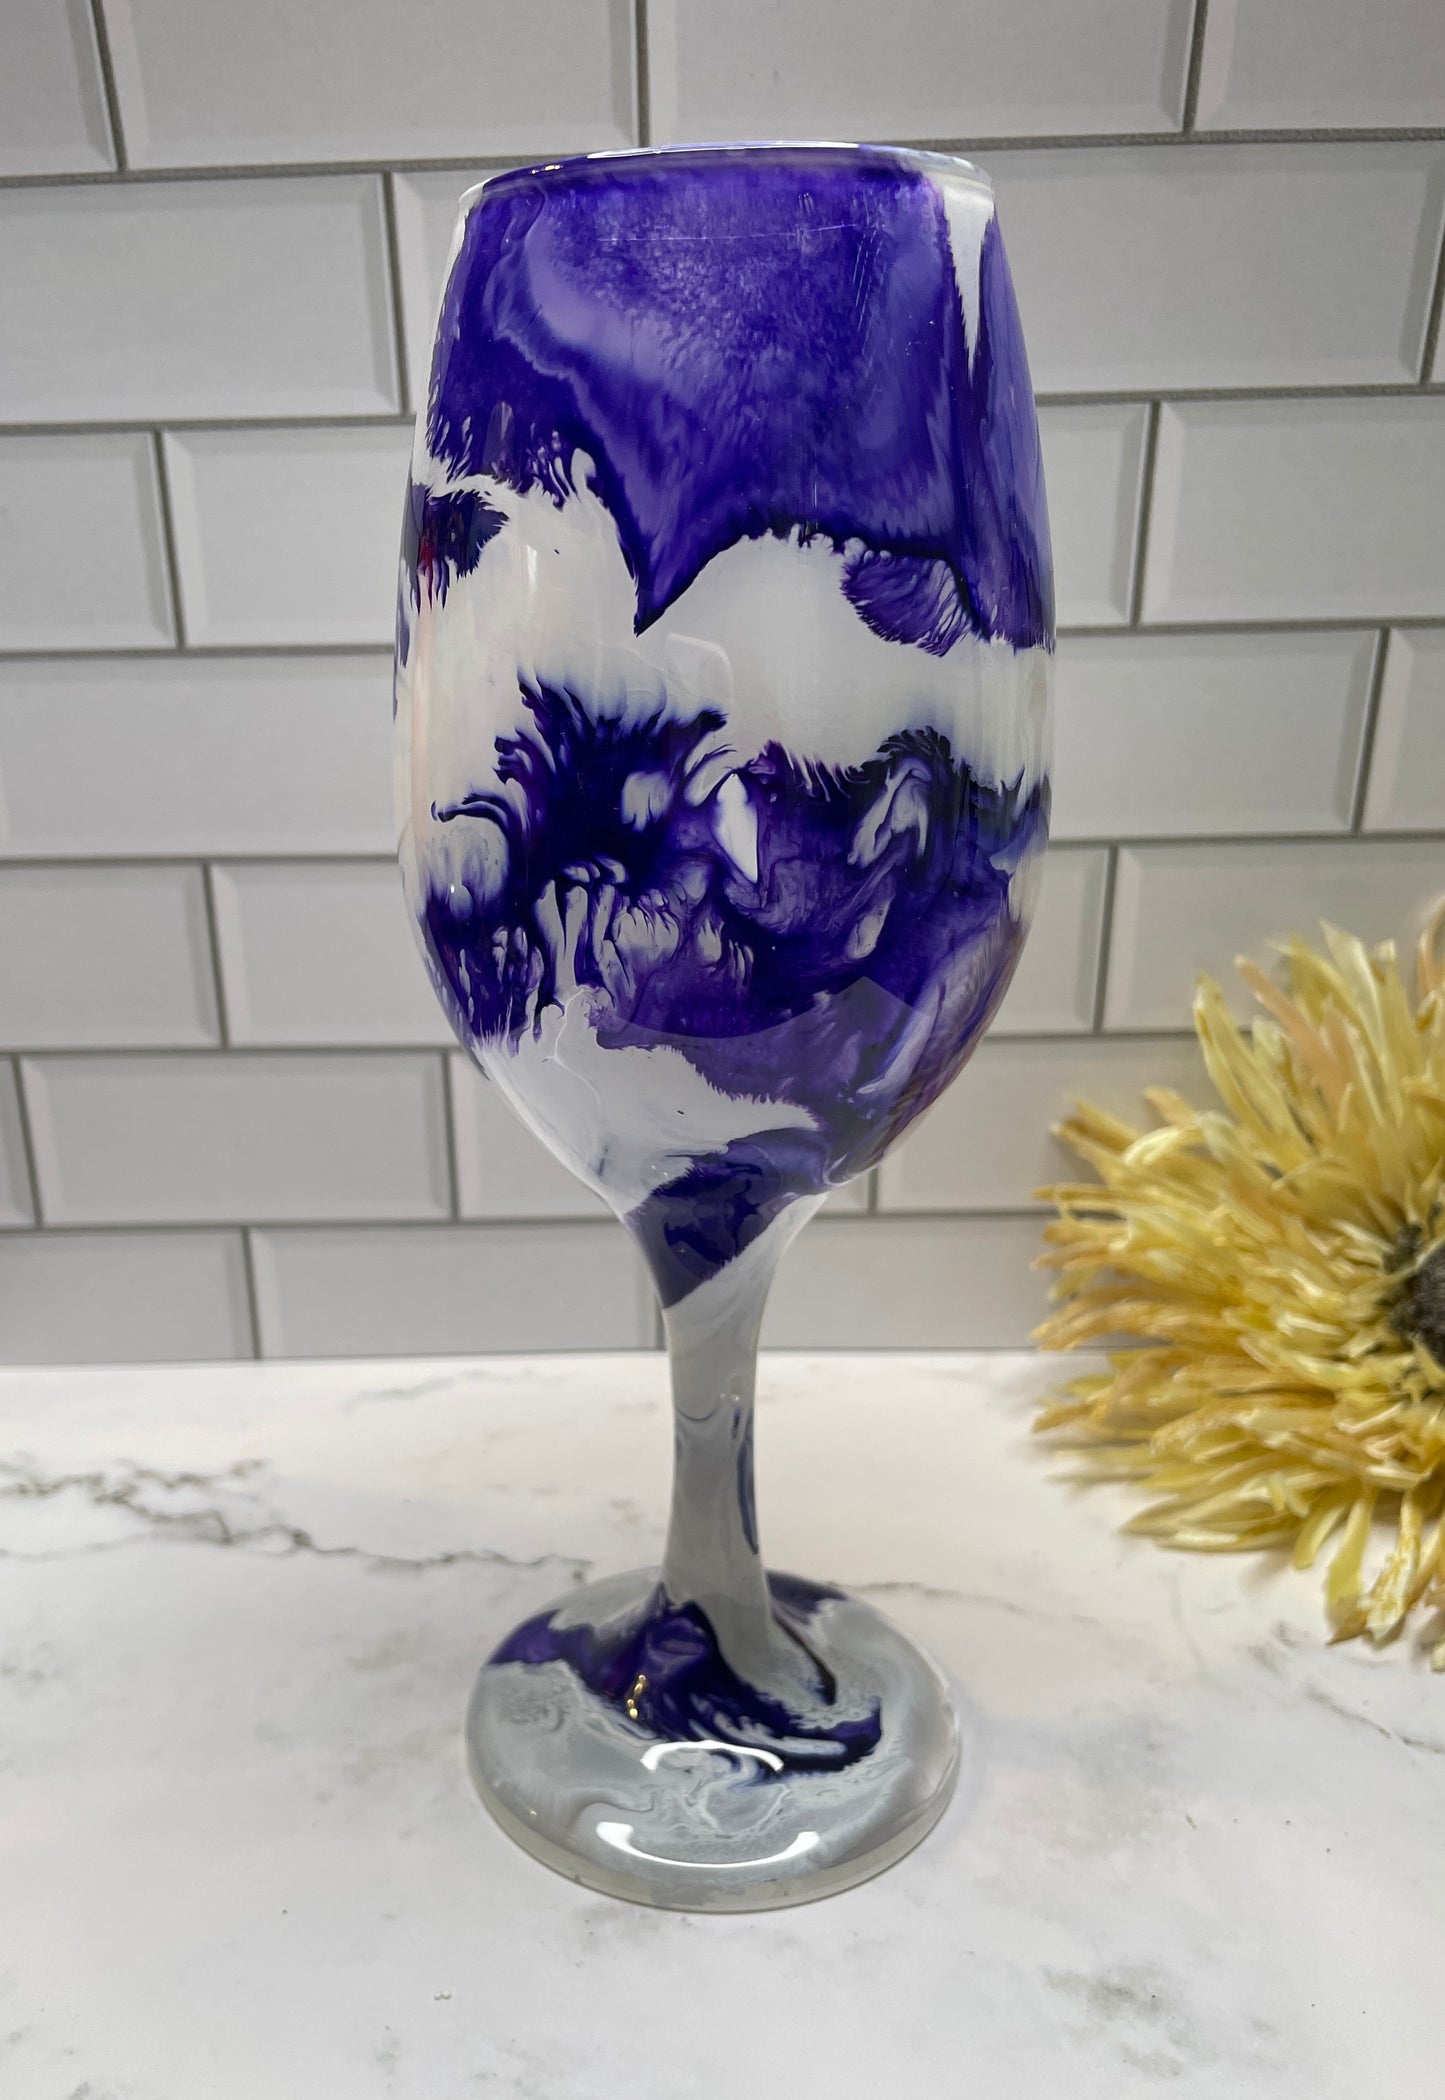 Amethyst Wine Glass